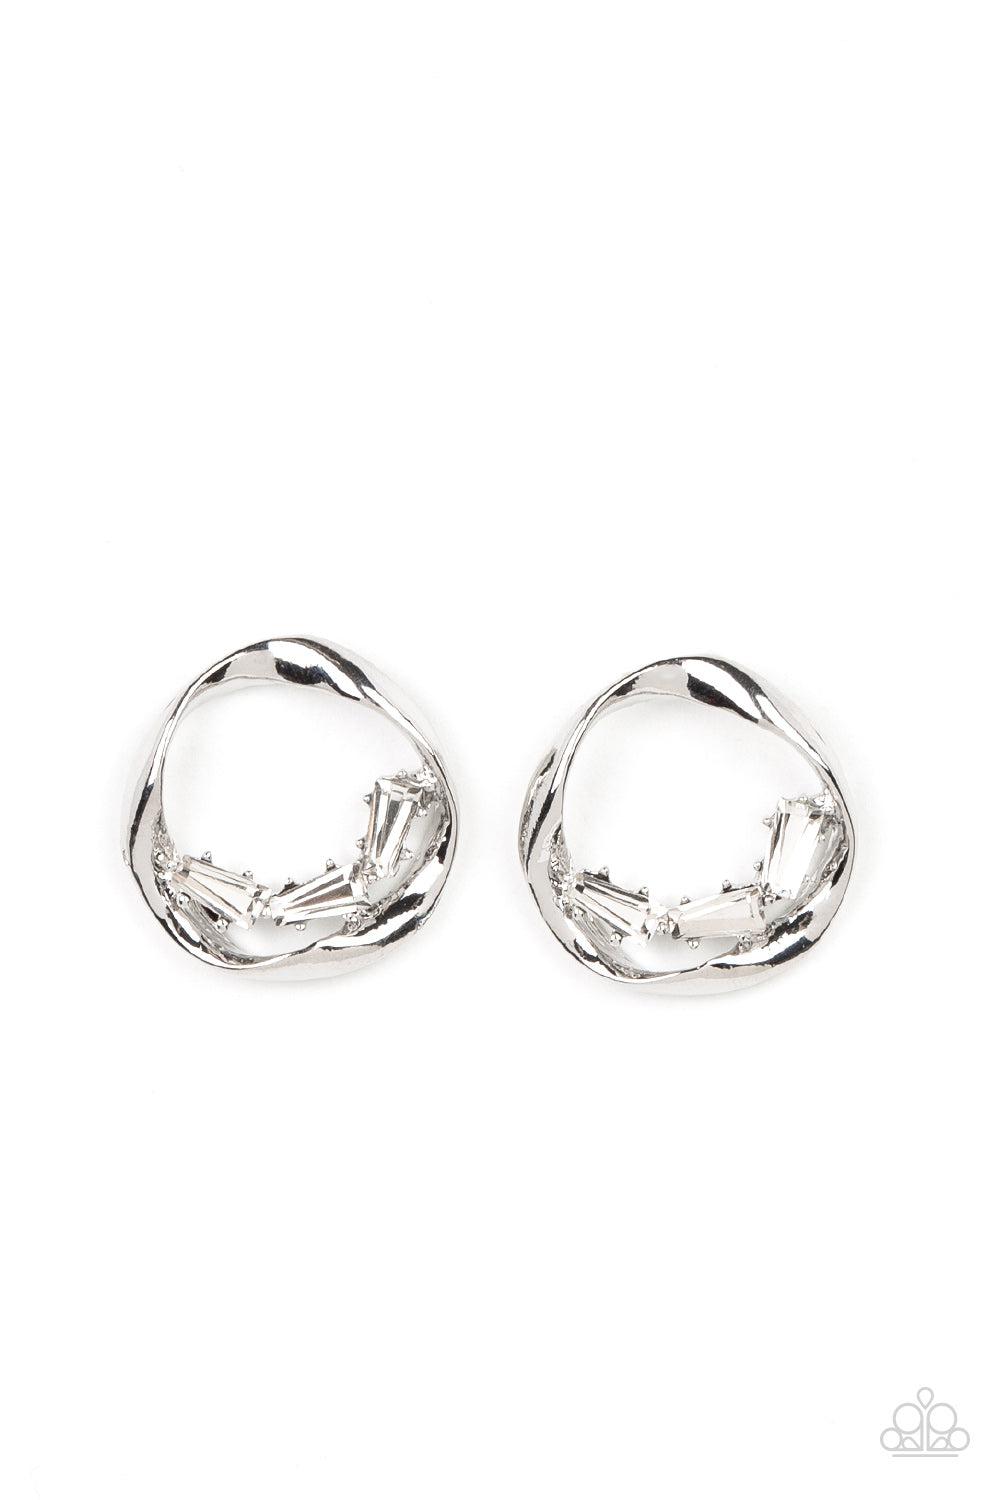 Imperfect Illumination White Rhinestone Earrings - Paparazzi Accessories- lightbox - CarasShop.com - $5 Jewelry by Cara Jewels